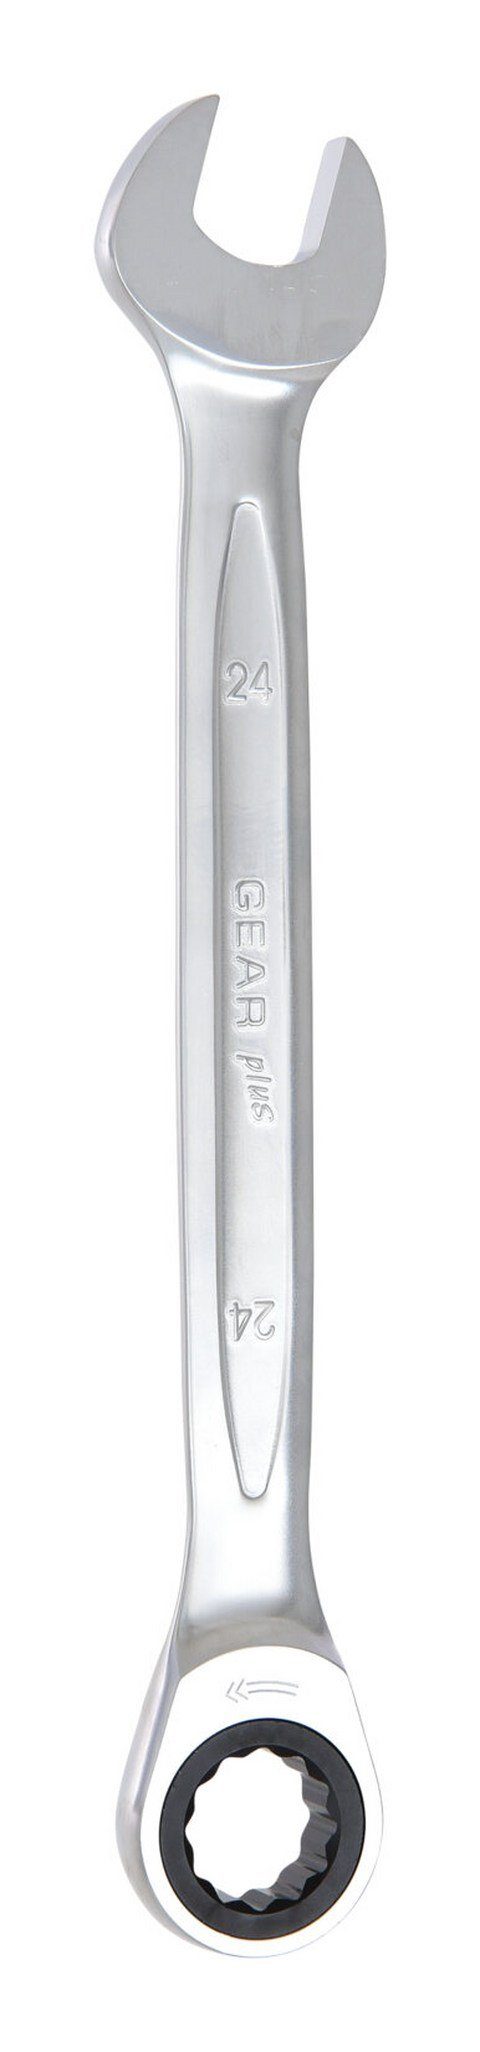 GEARplus, Ratschenringschlüssel Ratschenringmaulschlüssel, Tools KS mm 24